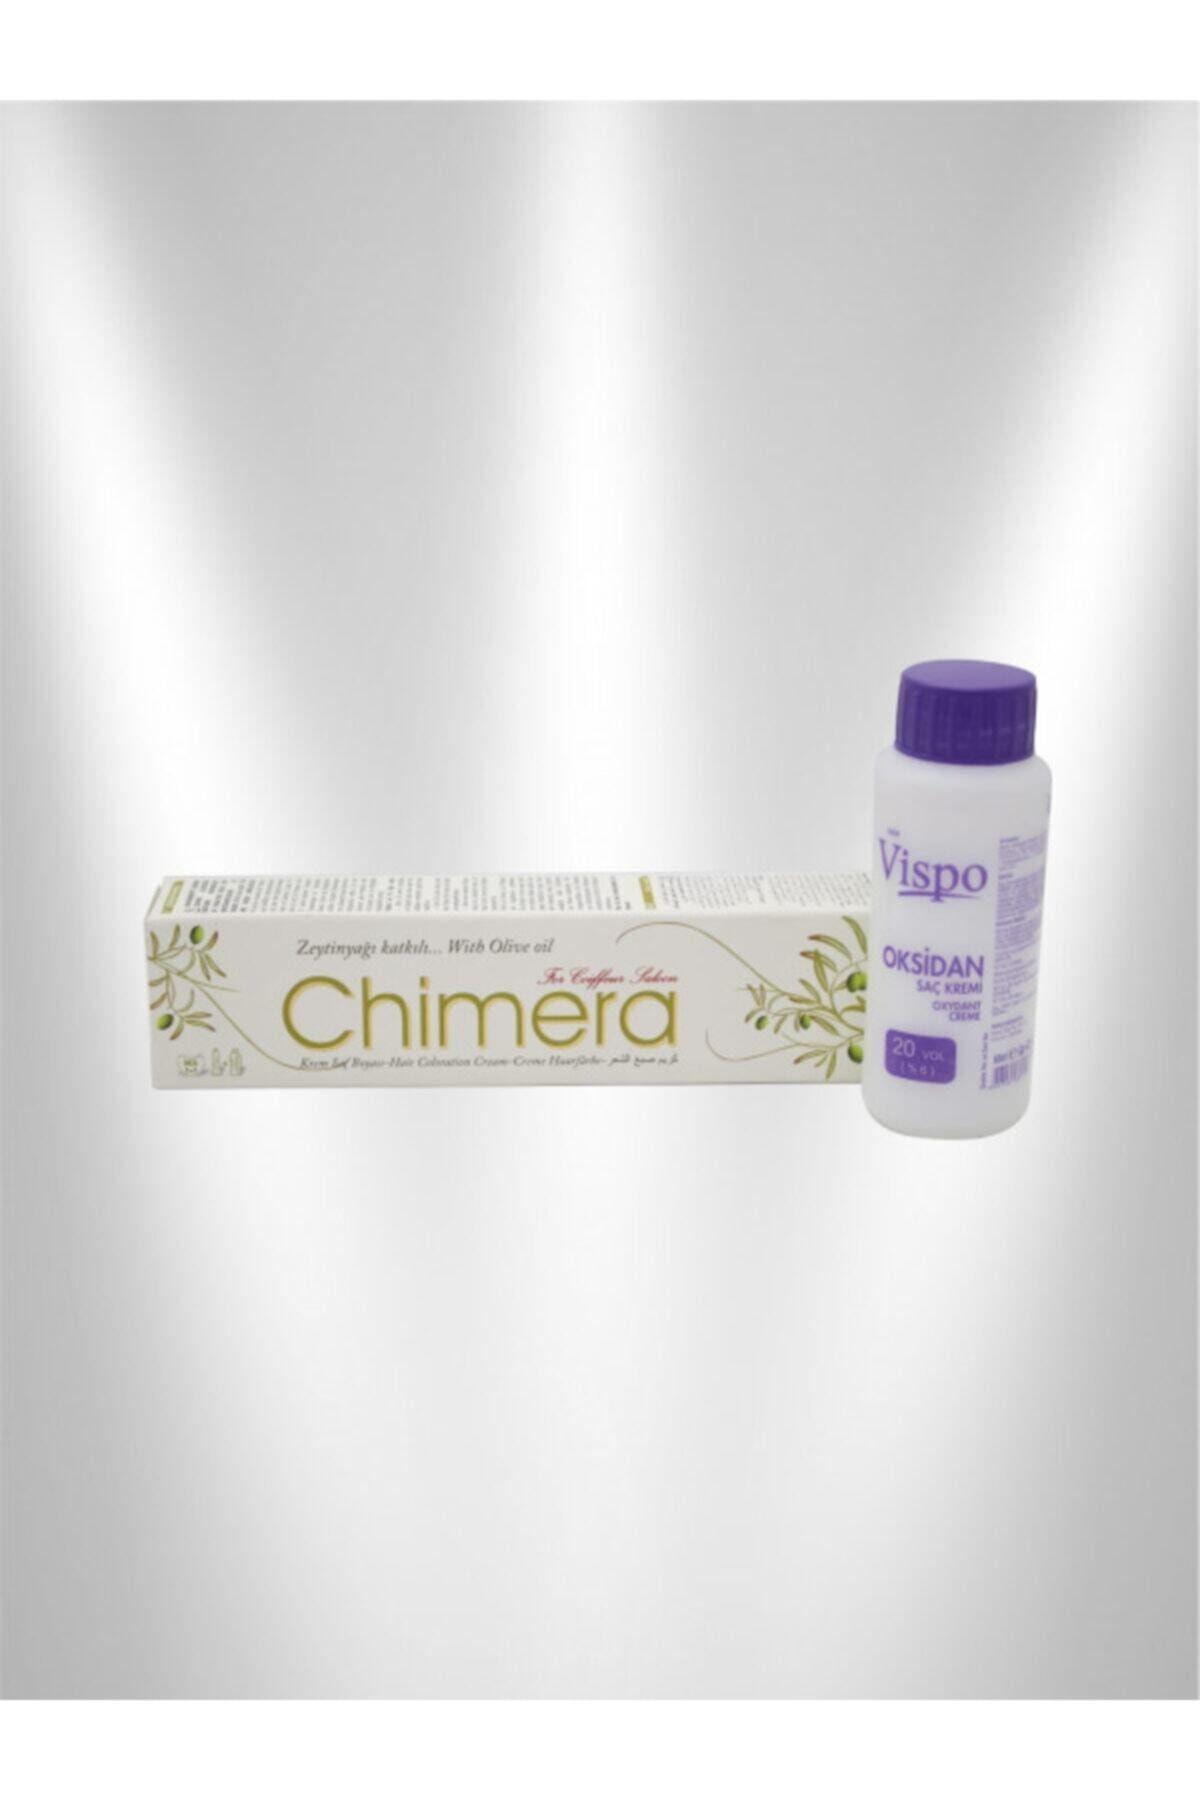 AKOS Chimera Saç Boyası 5.0 Açık Kahve 60 Ml. Oksidan